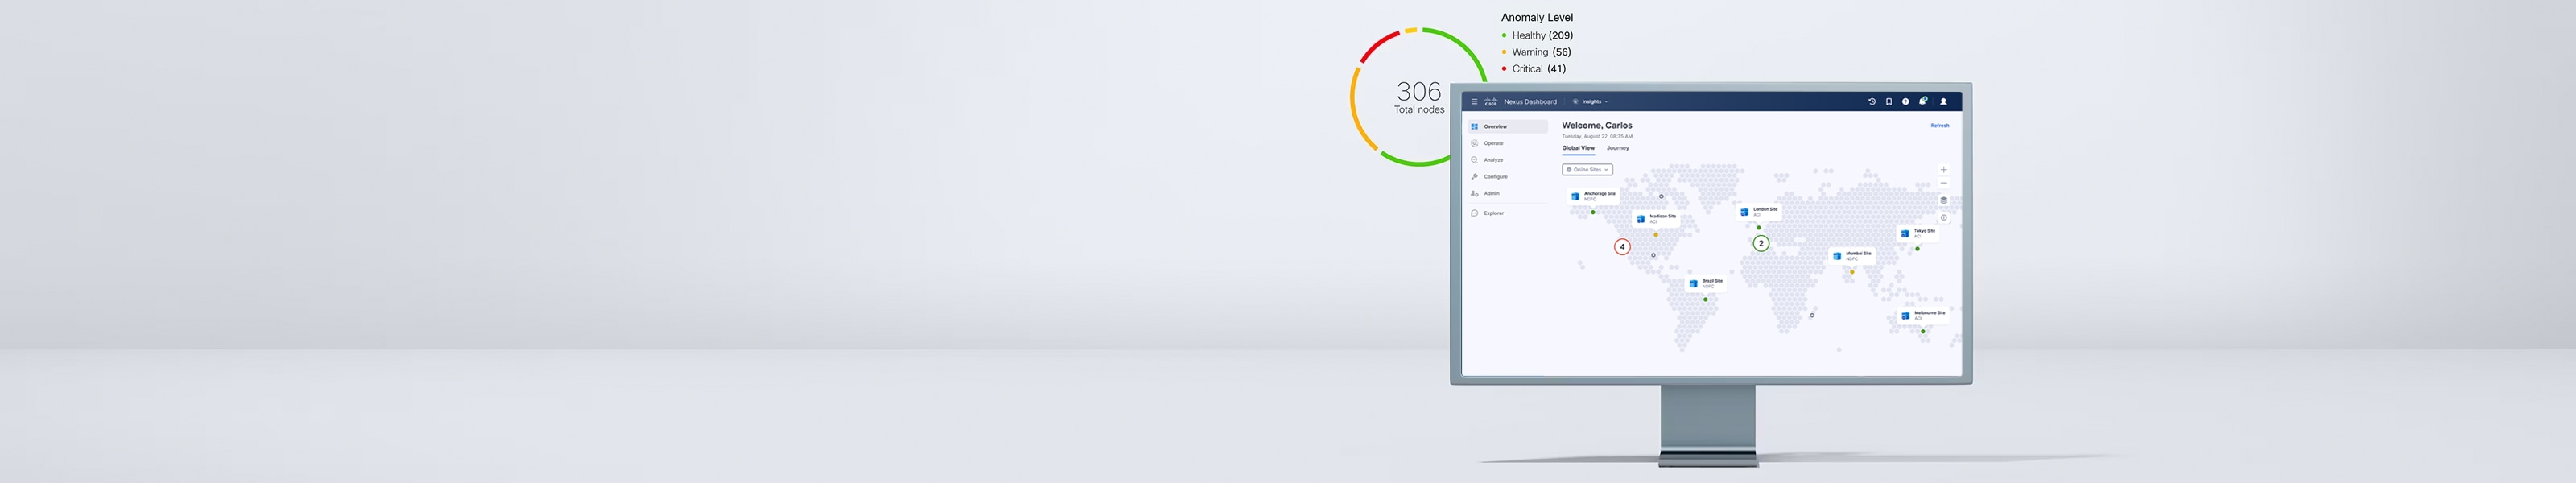 Cisco Nexus Dashboard displaying system overview